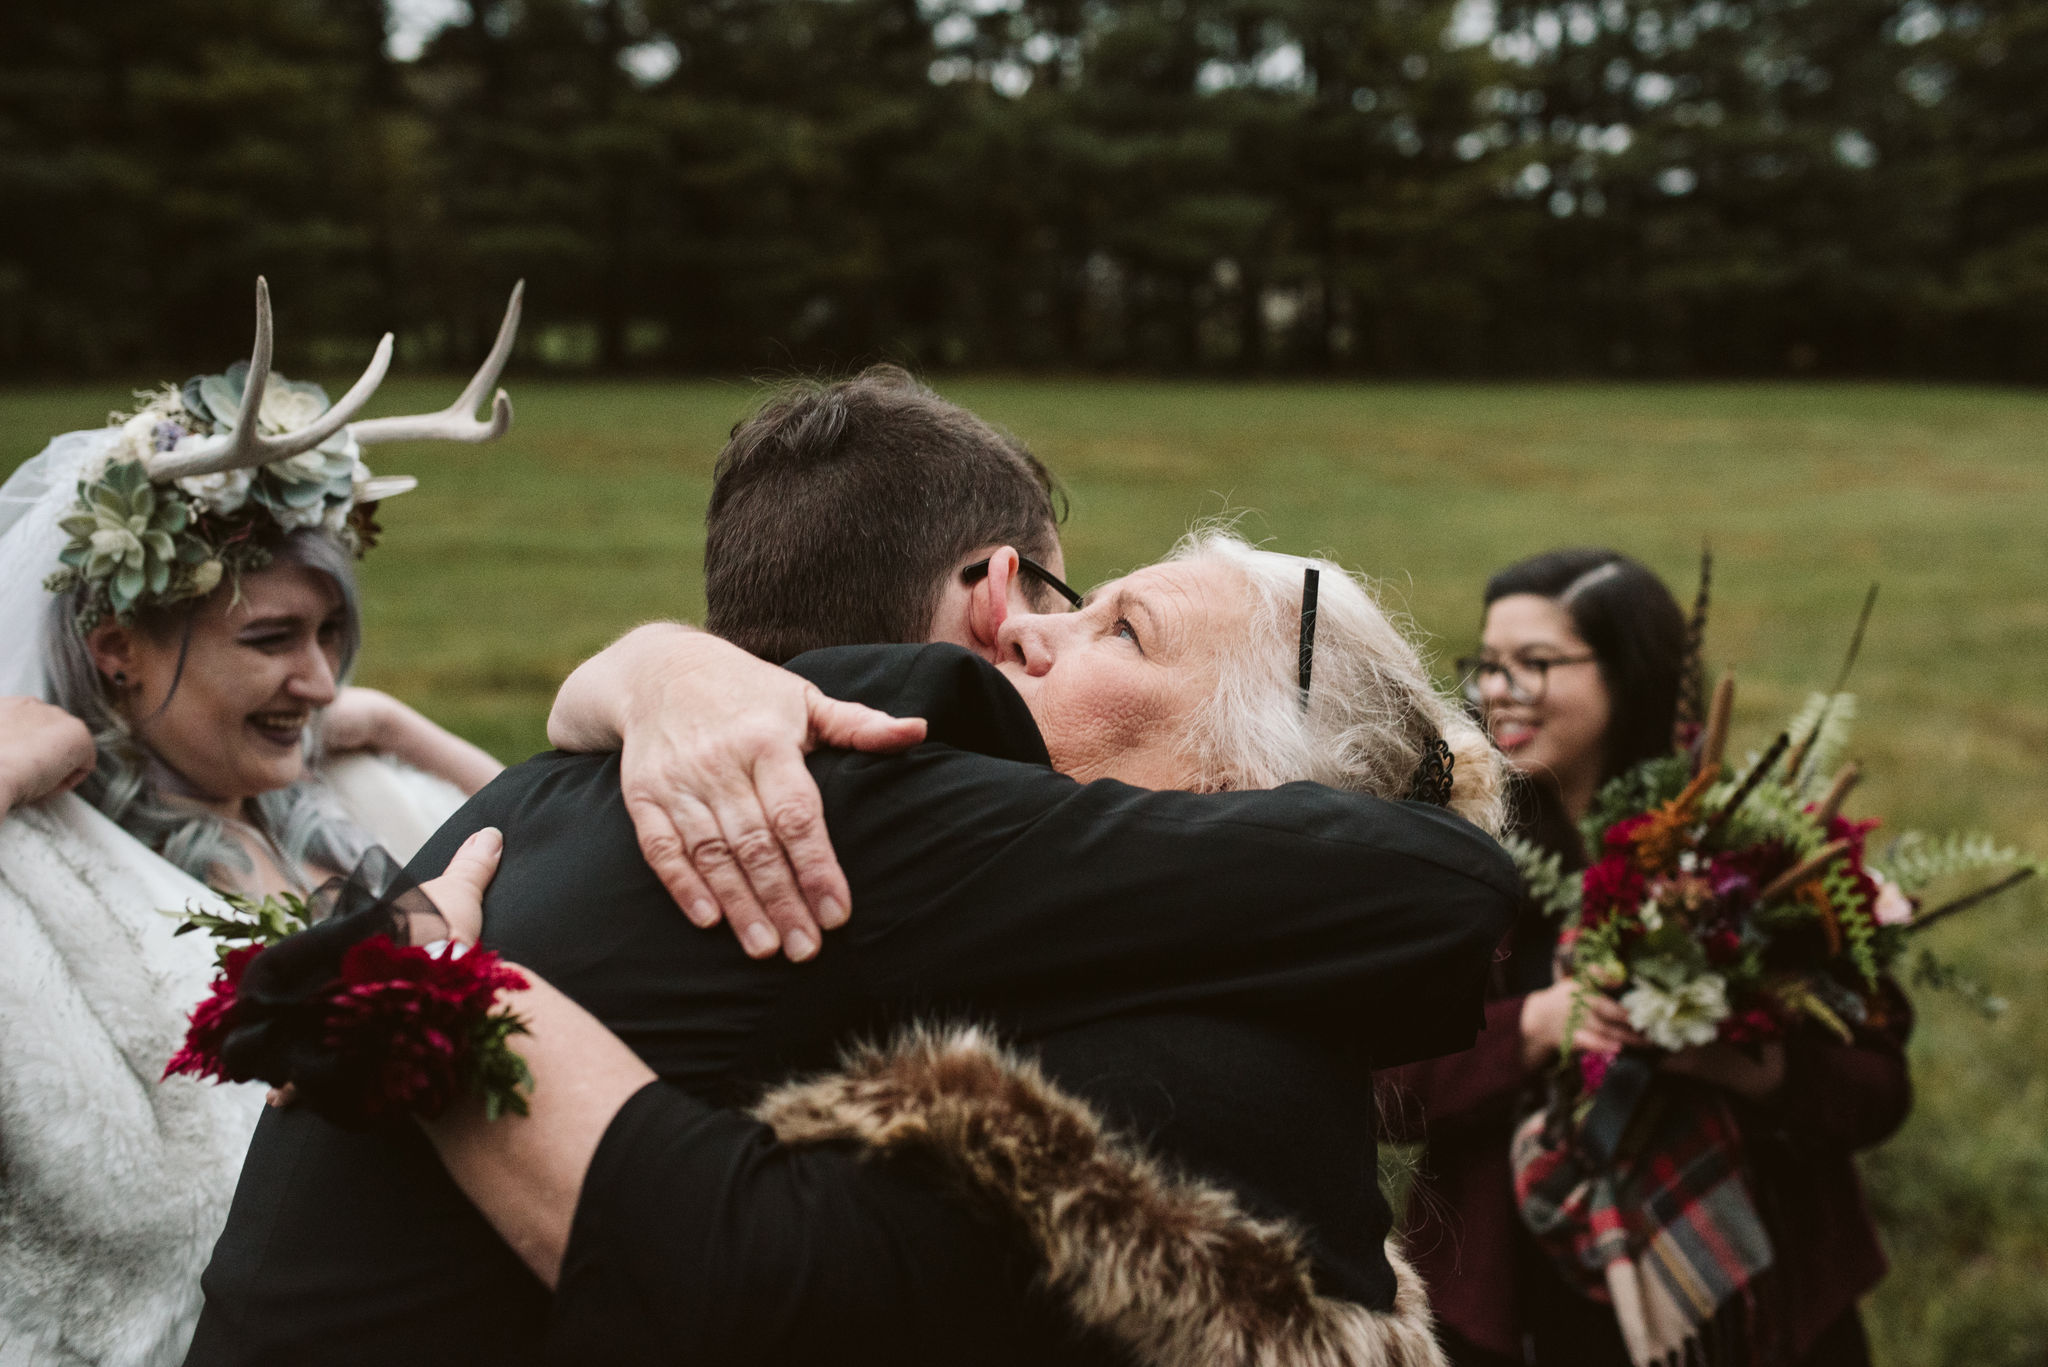  Maryland, Baltimore Wedding Photographer, Backyard Wedding, Fall, October, Dark Bohemian, Whimsical, Fun, Family Congratulating Bride and Groom, Candid Photo 